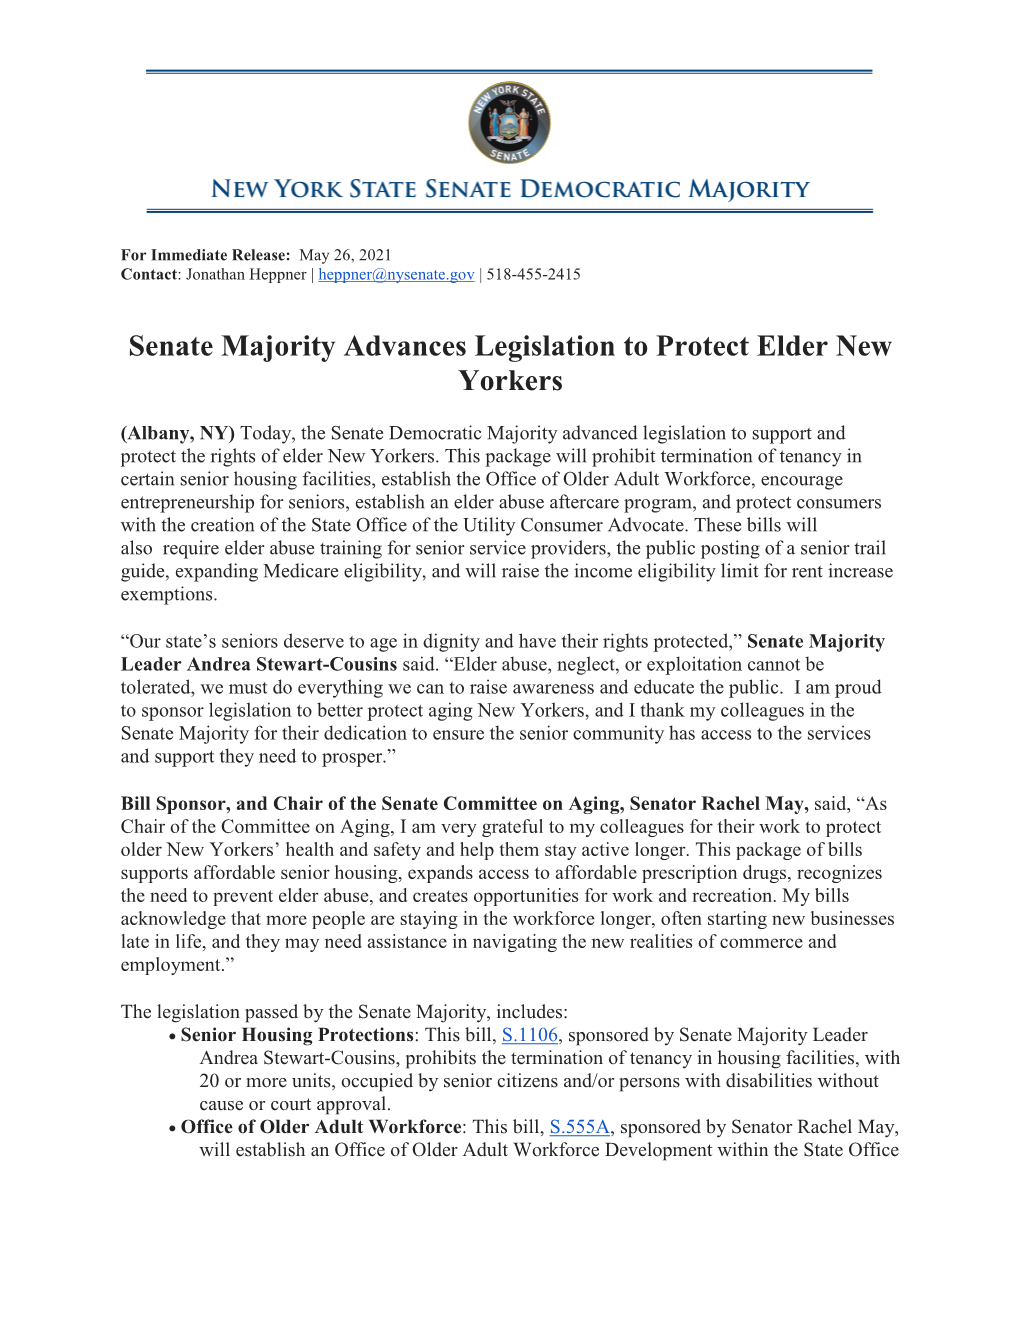 Senate Majority Advances Legislation to Protect Elder New Yorkers